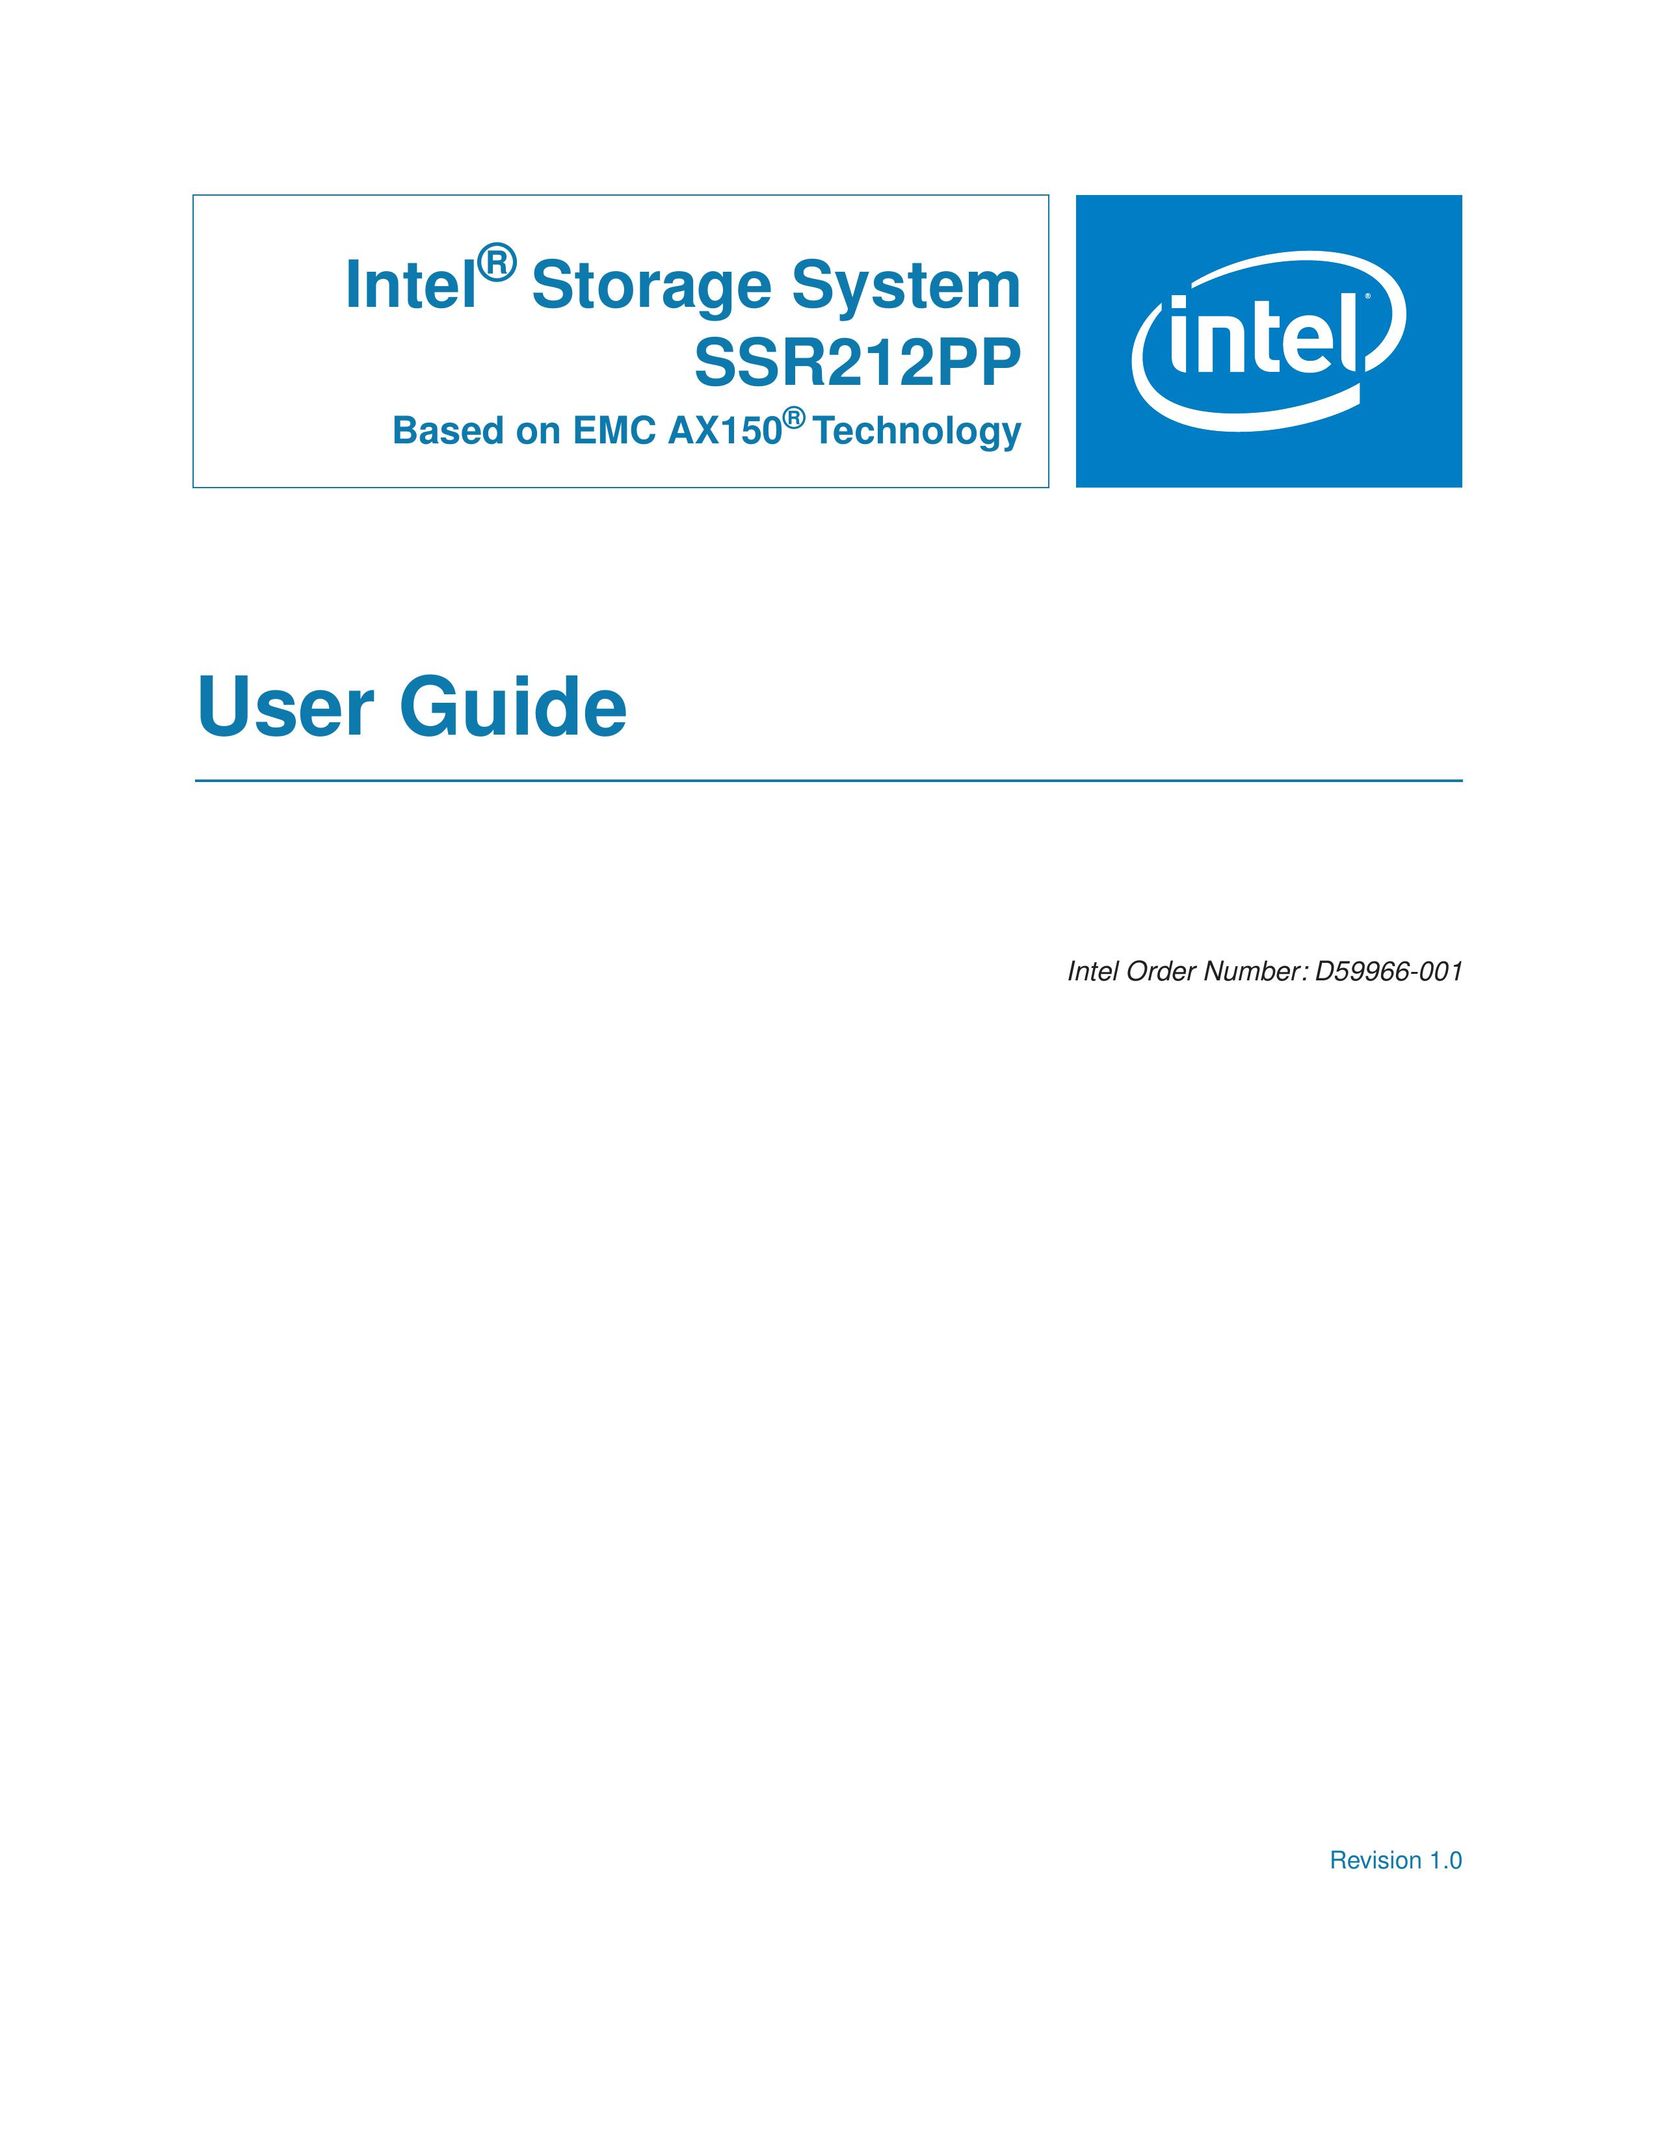 Intel SSR212PP Network Card User Manual